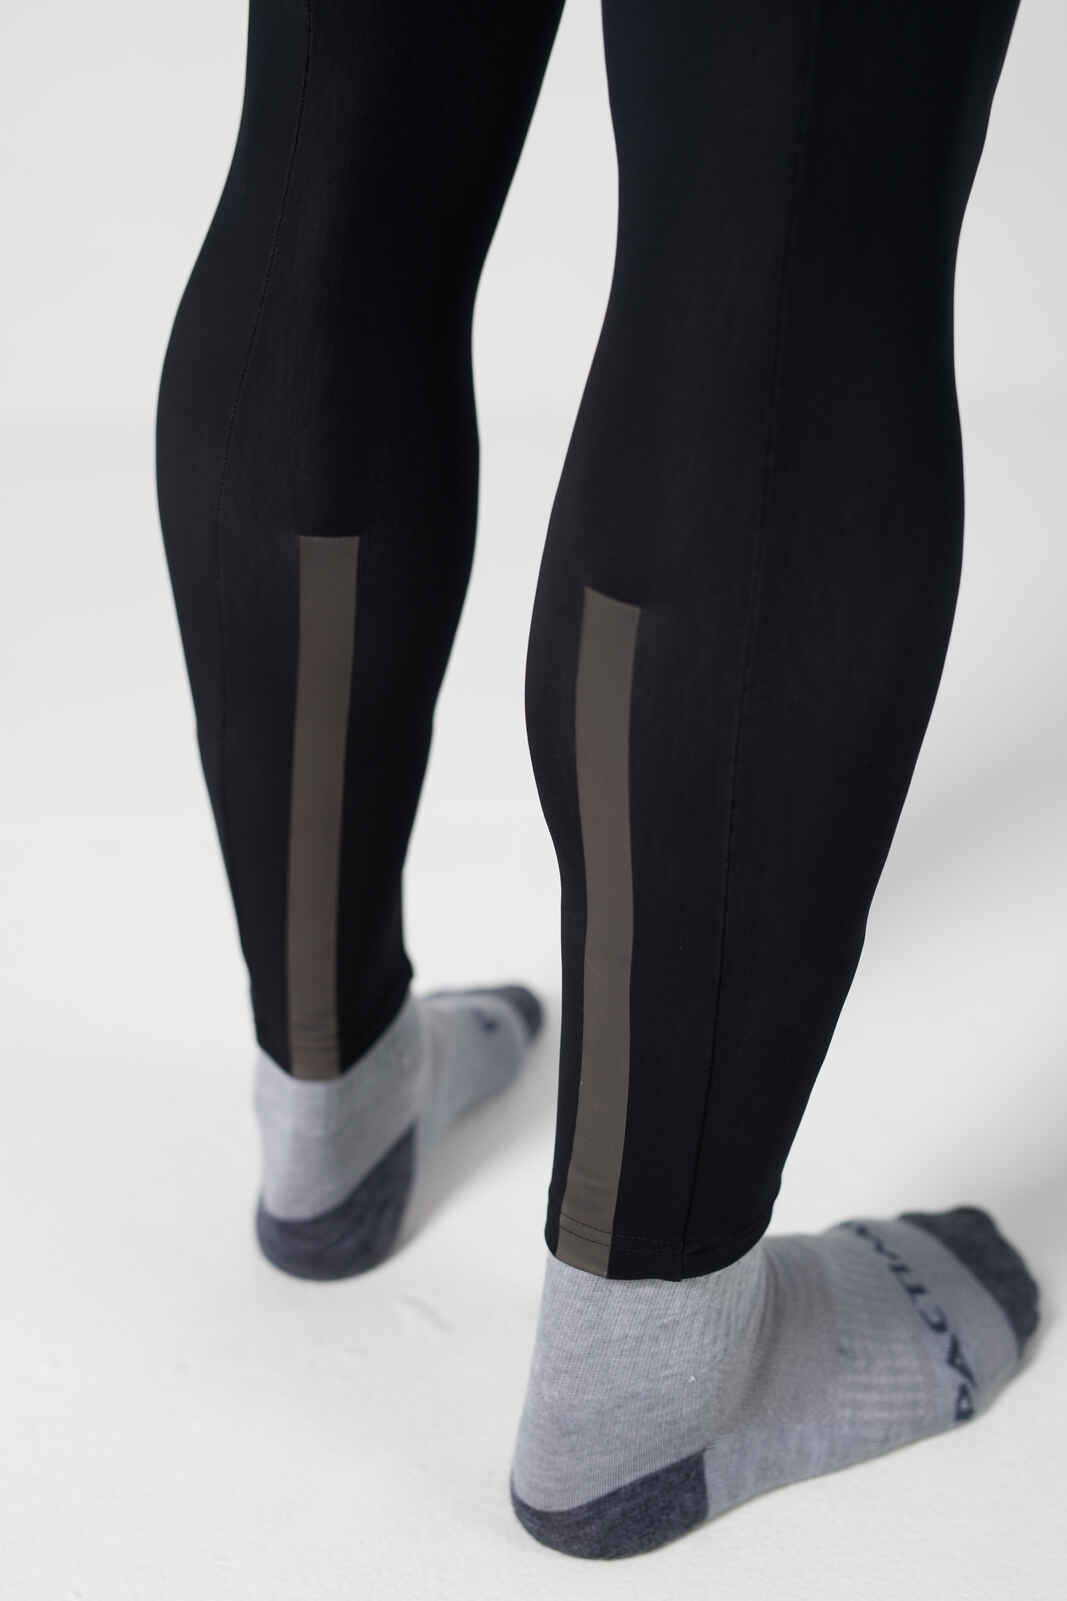 Men's Thermal Cycling Bib Tights - On Body Reflective Leg Details